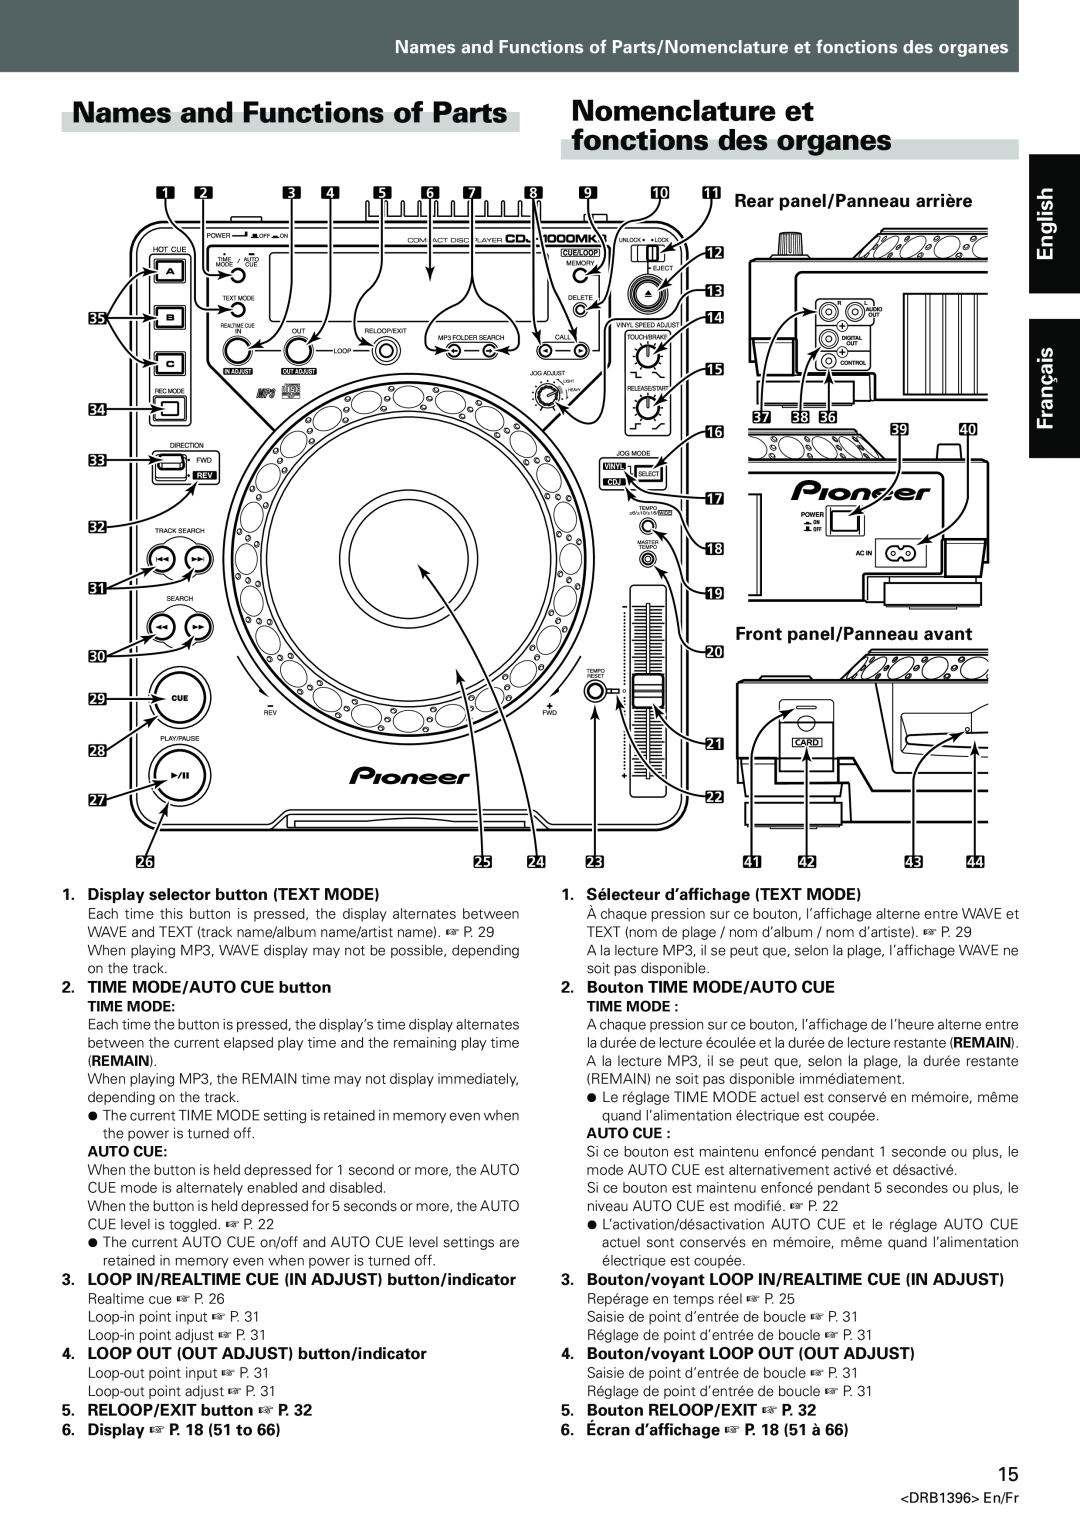 Pioneer CDJ-1000MK3 manual Names and Functions of Parts, Nomenclature et, fonctions des organes, Rear panel/Panneau arrière 